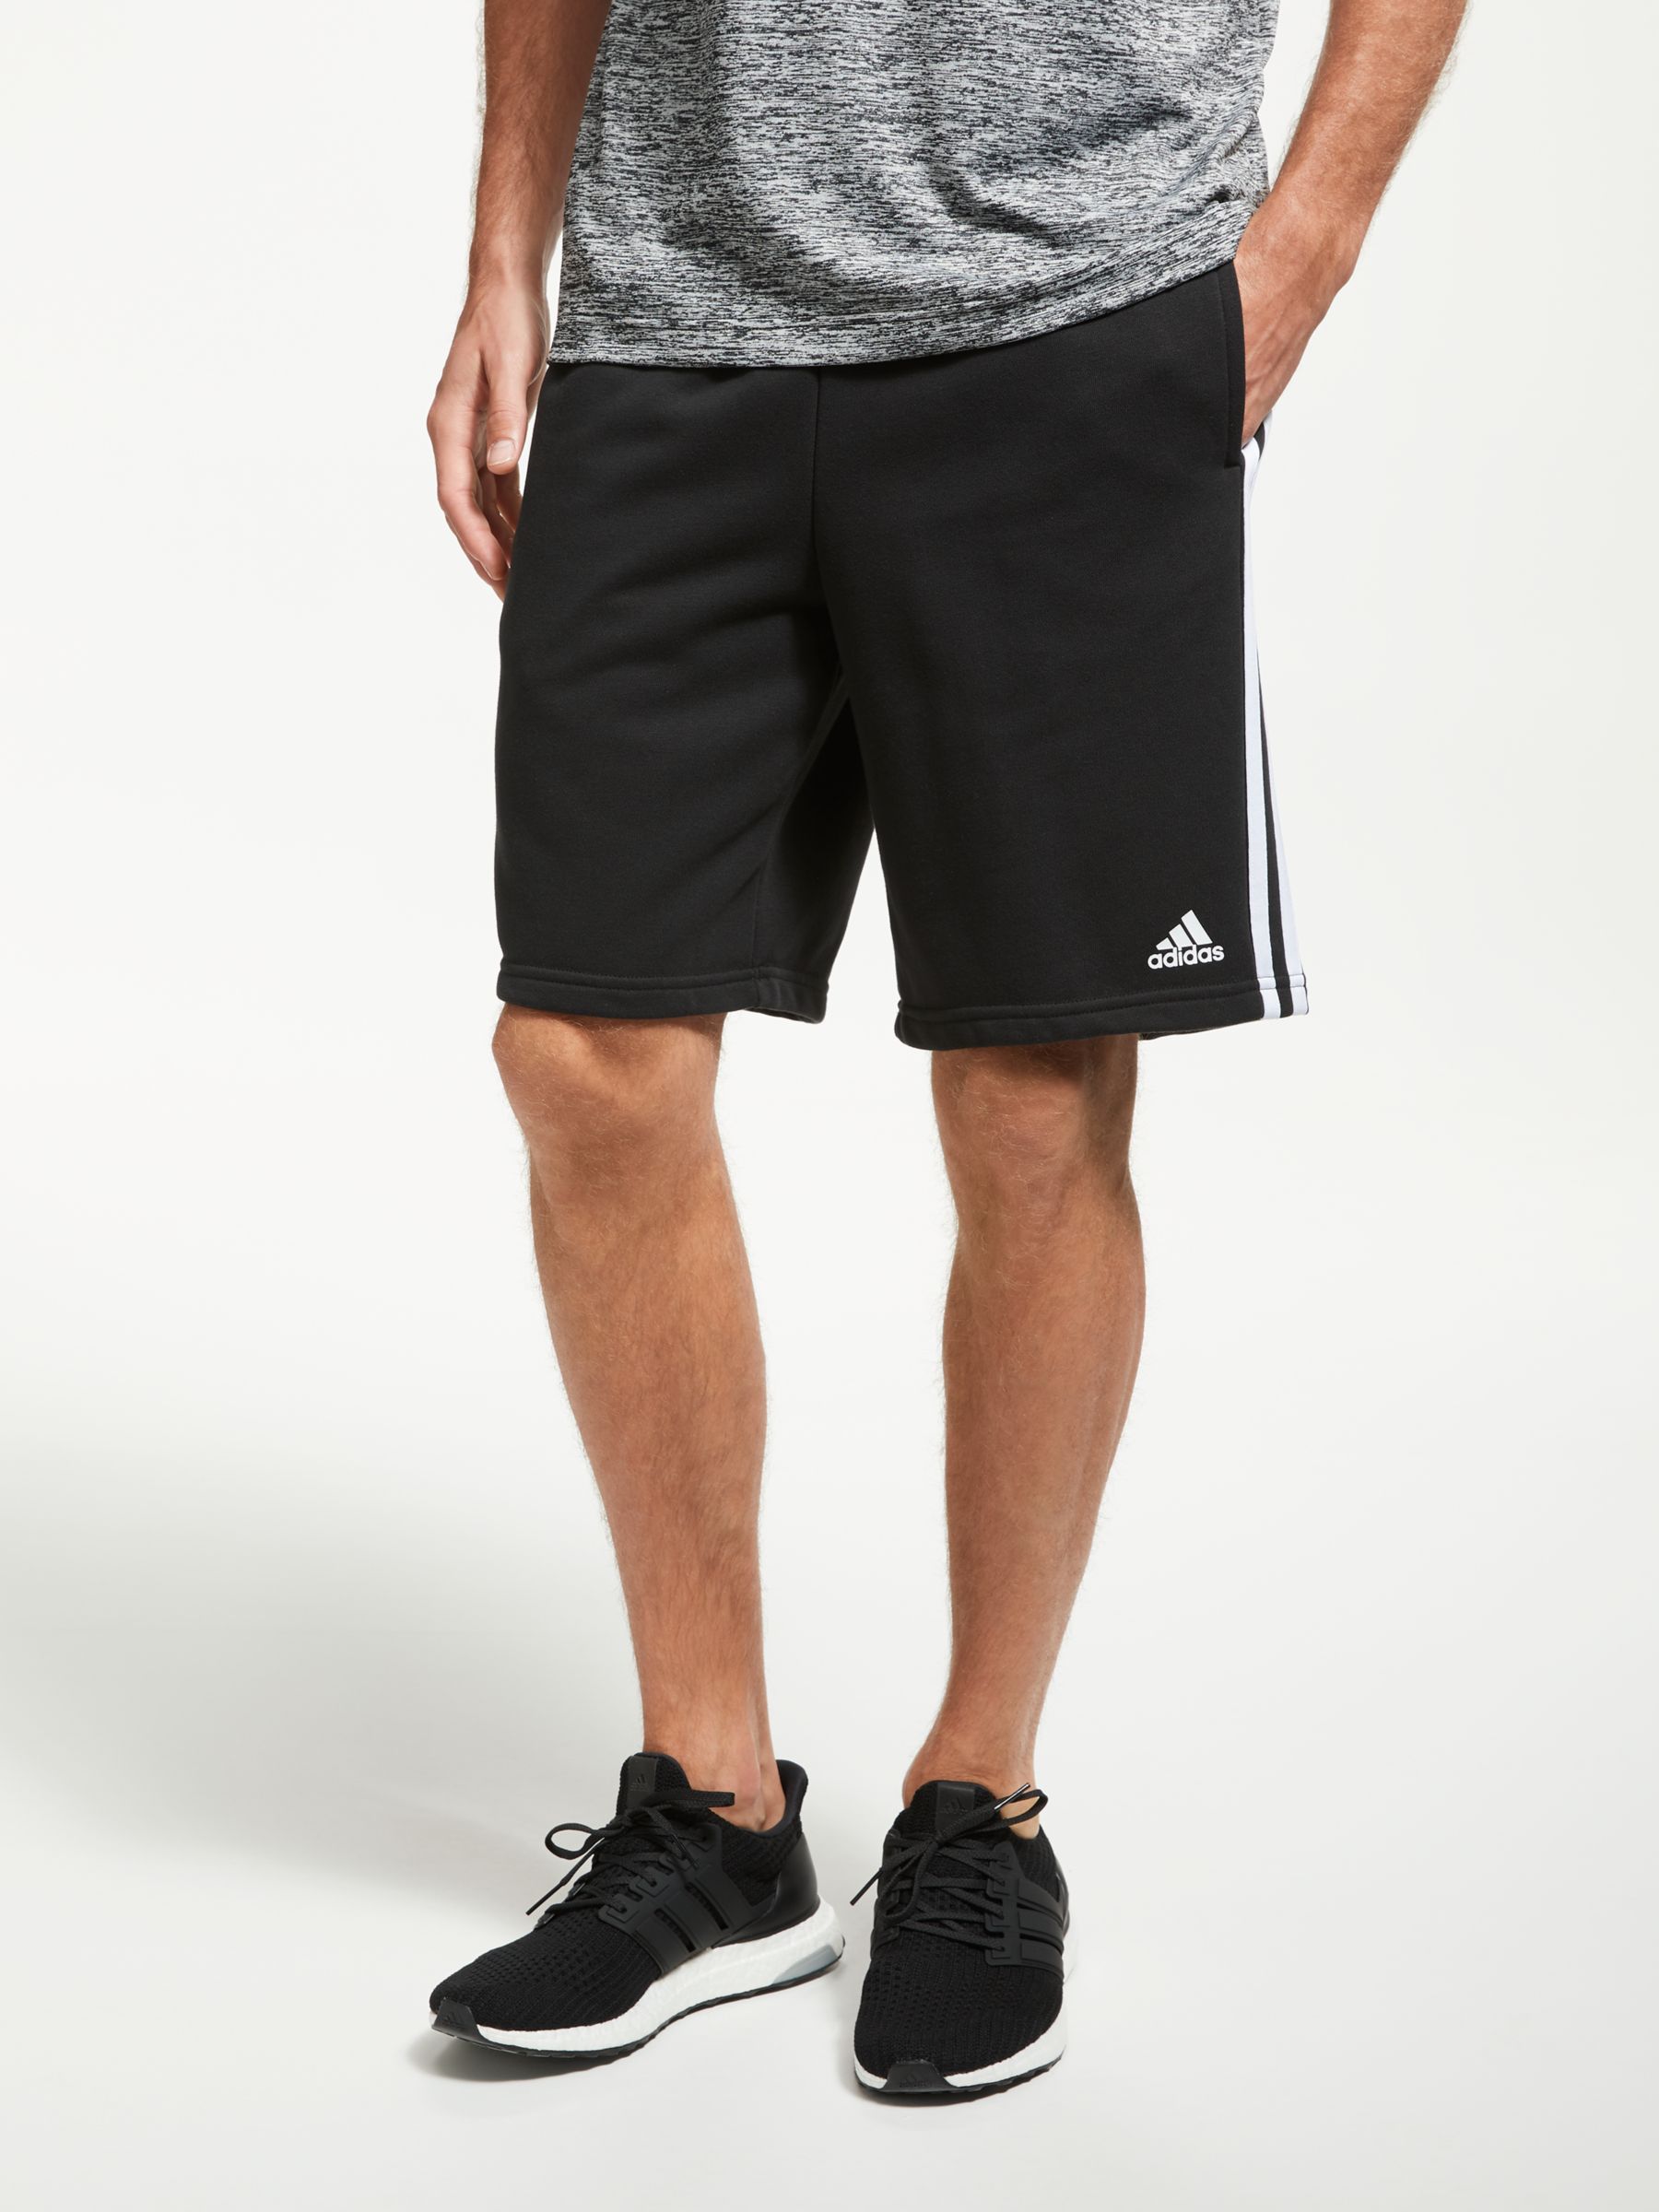 adidas Athletics Essentials 3-Stripes Shorts, Black